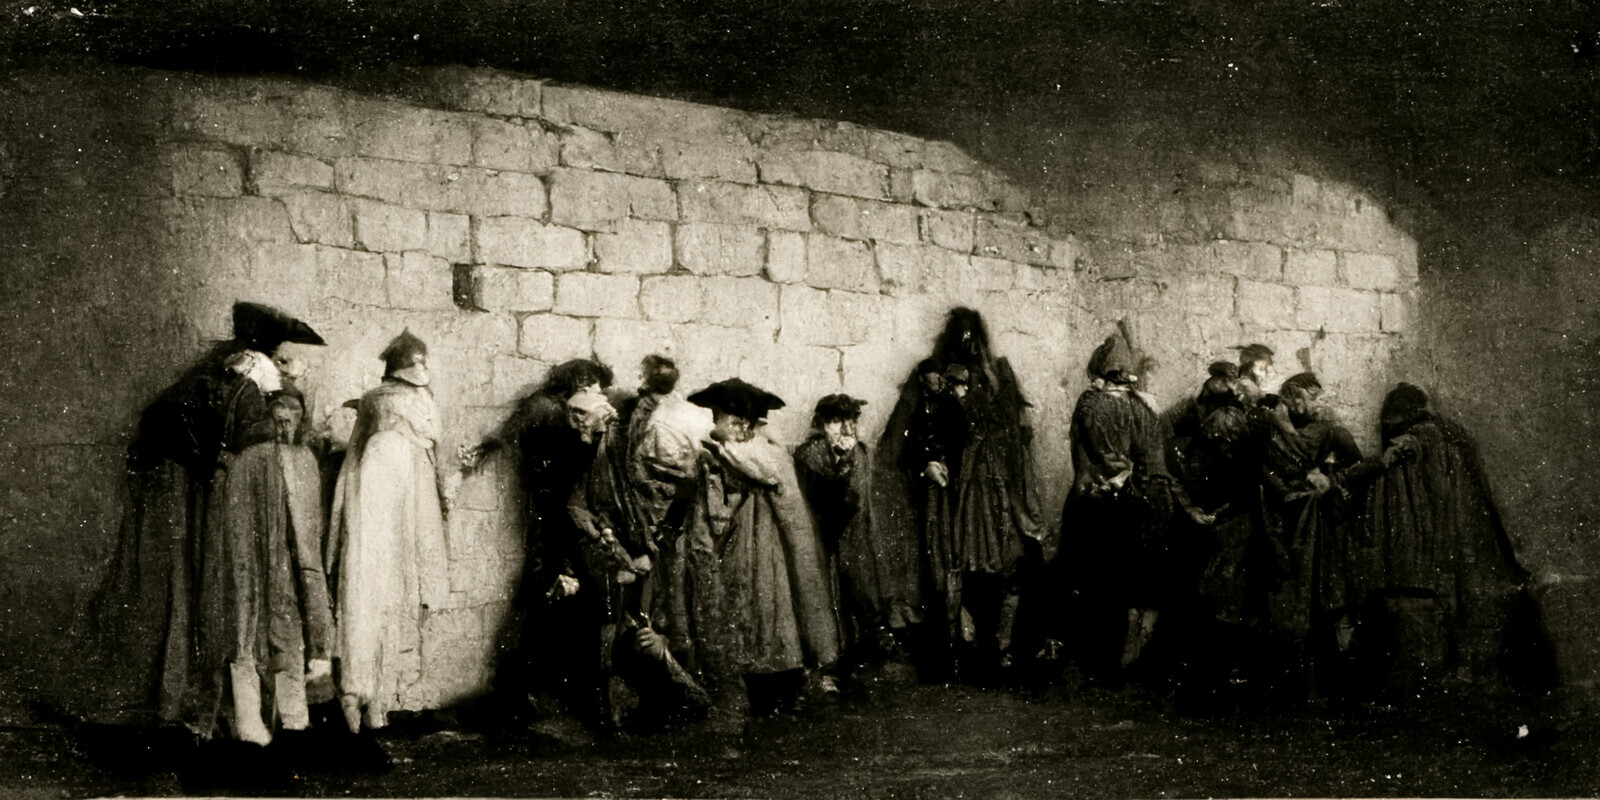 Collective Punishment
c. 1885
Photograph
[Illegible text]